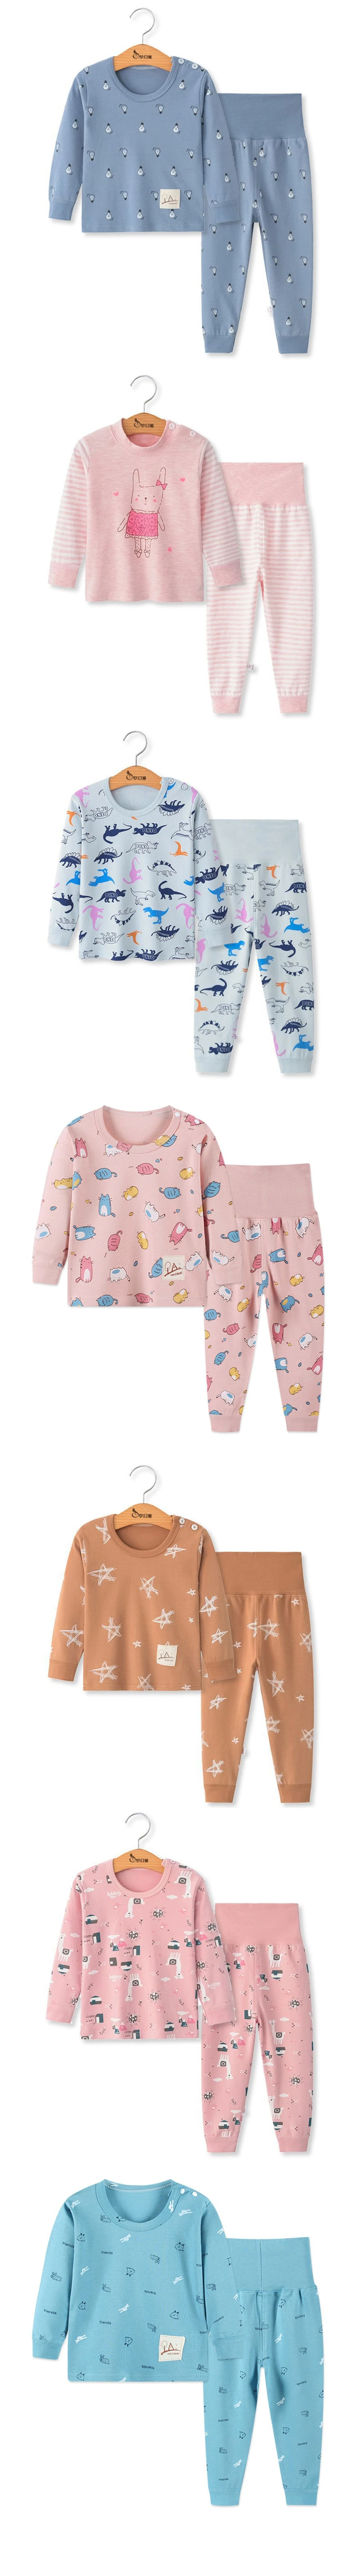 Toddler Girls' 2-Piece Snug Fit Cotton Pajama Set